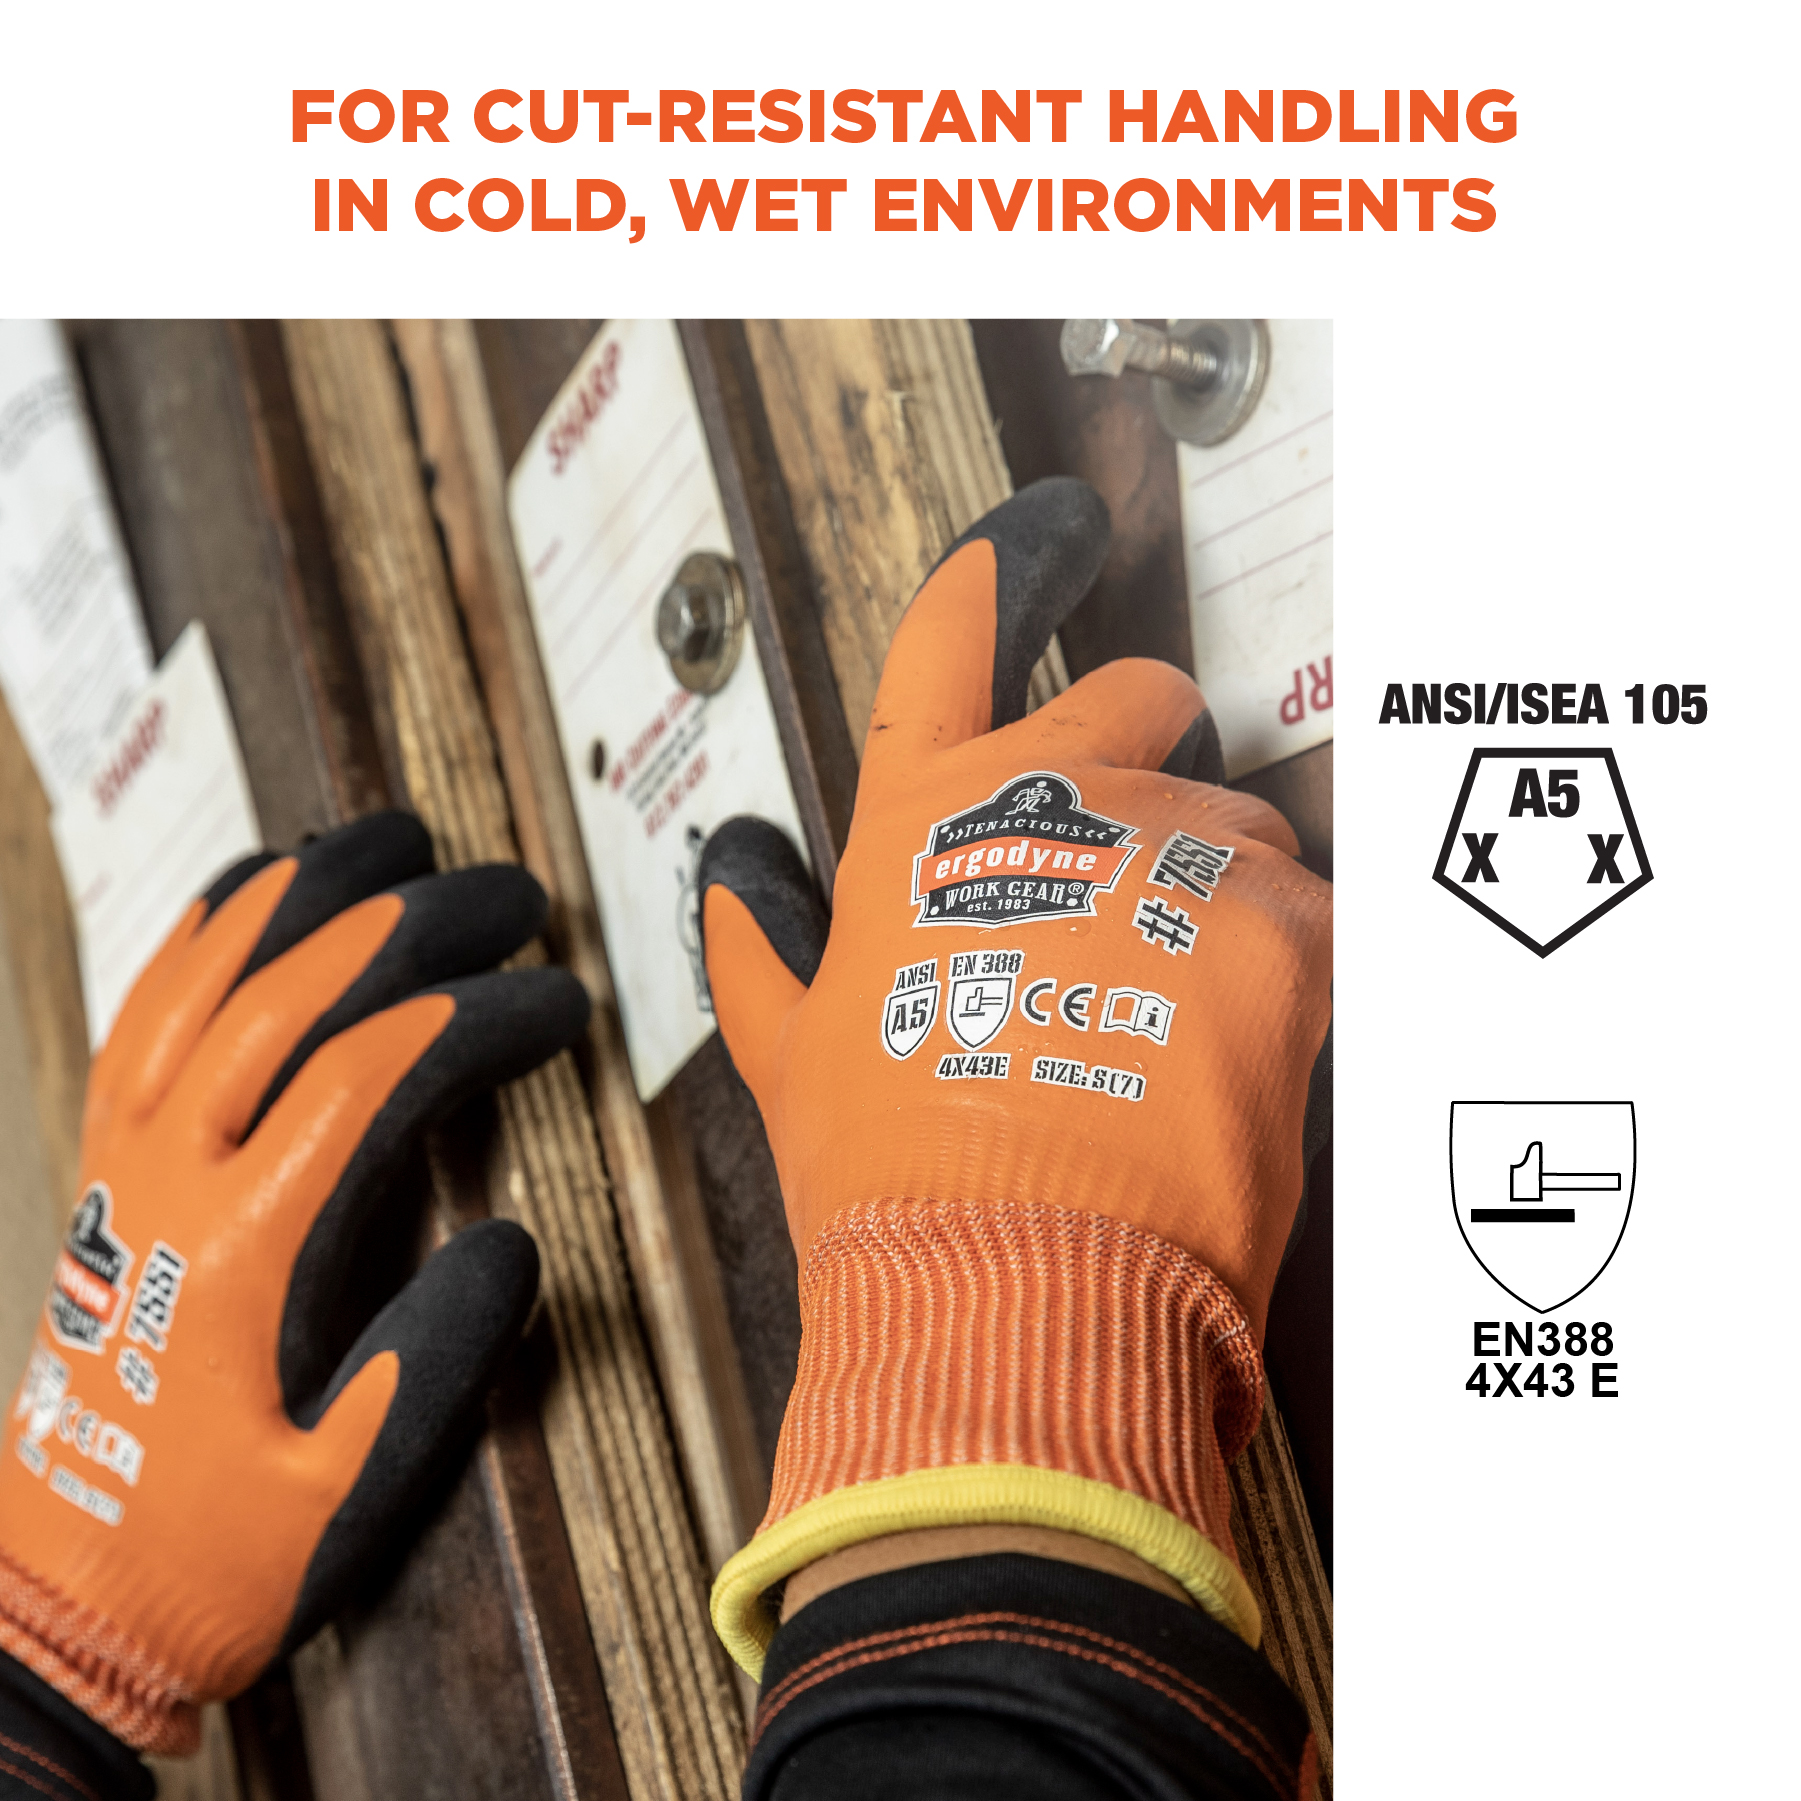 https://www.ergodyne.com/sites/default/files/product-images/17672-7551-coated-waterproof-winter-work-gloves-orange-for-cut-resistant-handling-cold-wet-environments_0.jpg